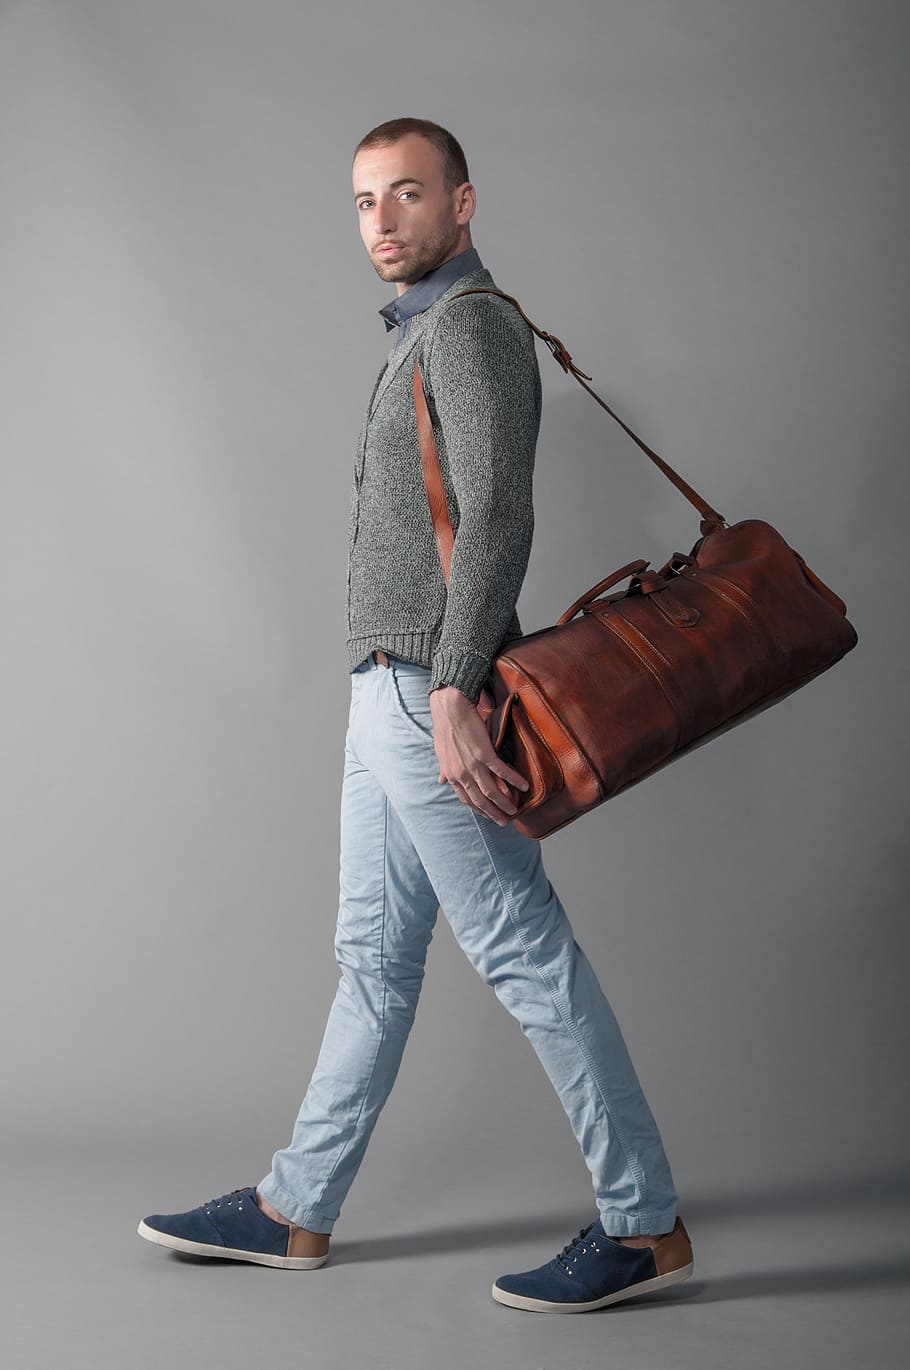 HD wallpaper: man wearing brown leather duffel bag, fashion, shooting ...